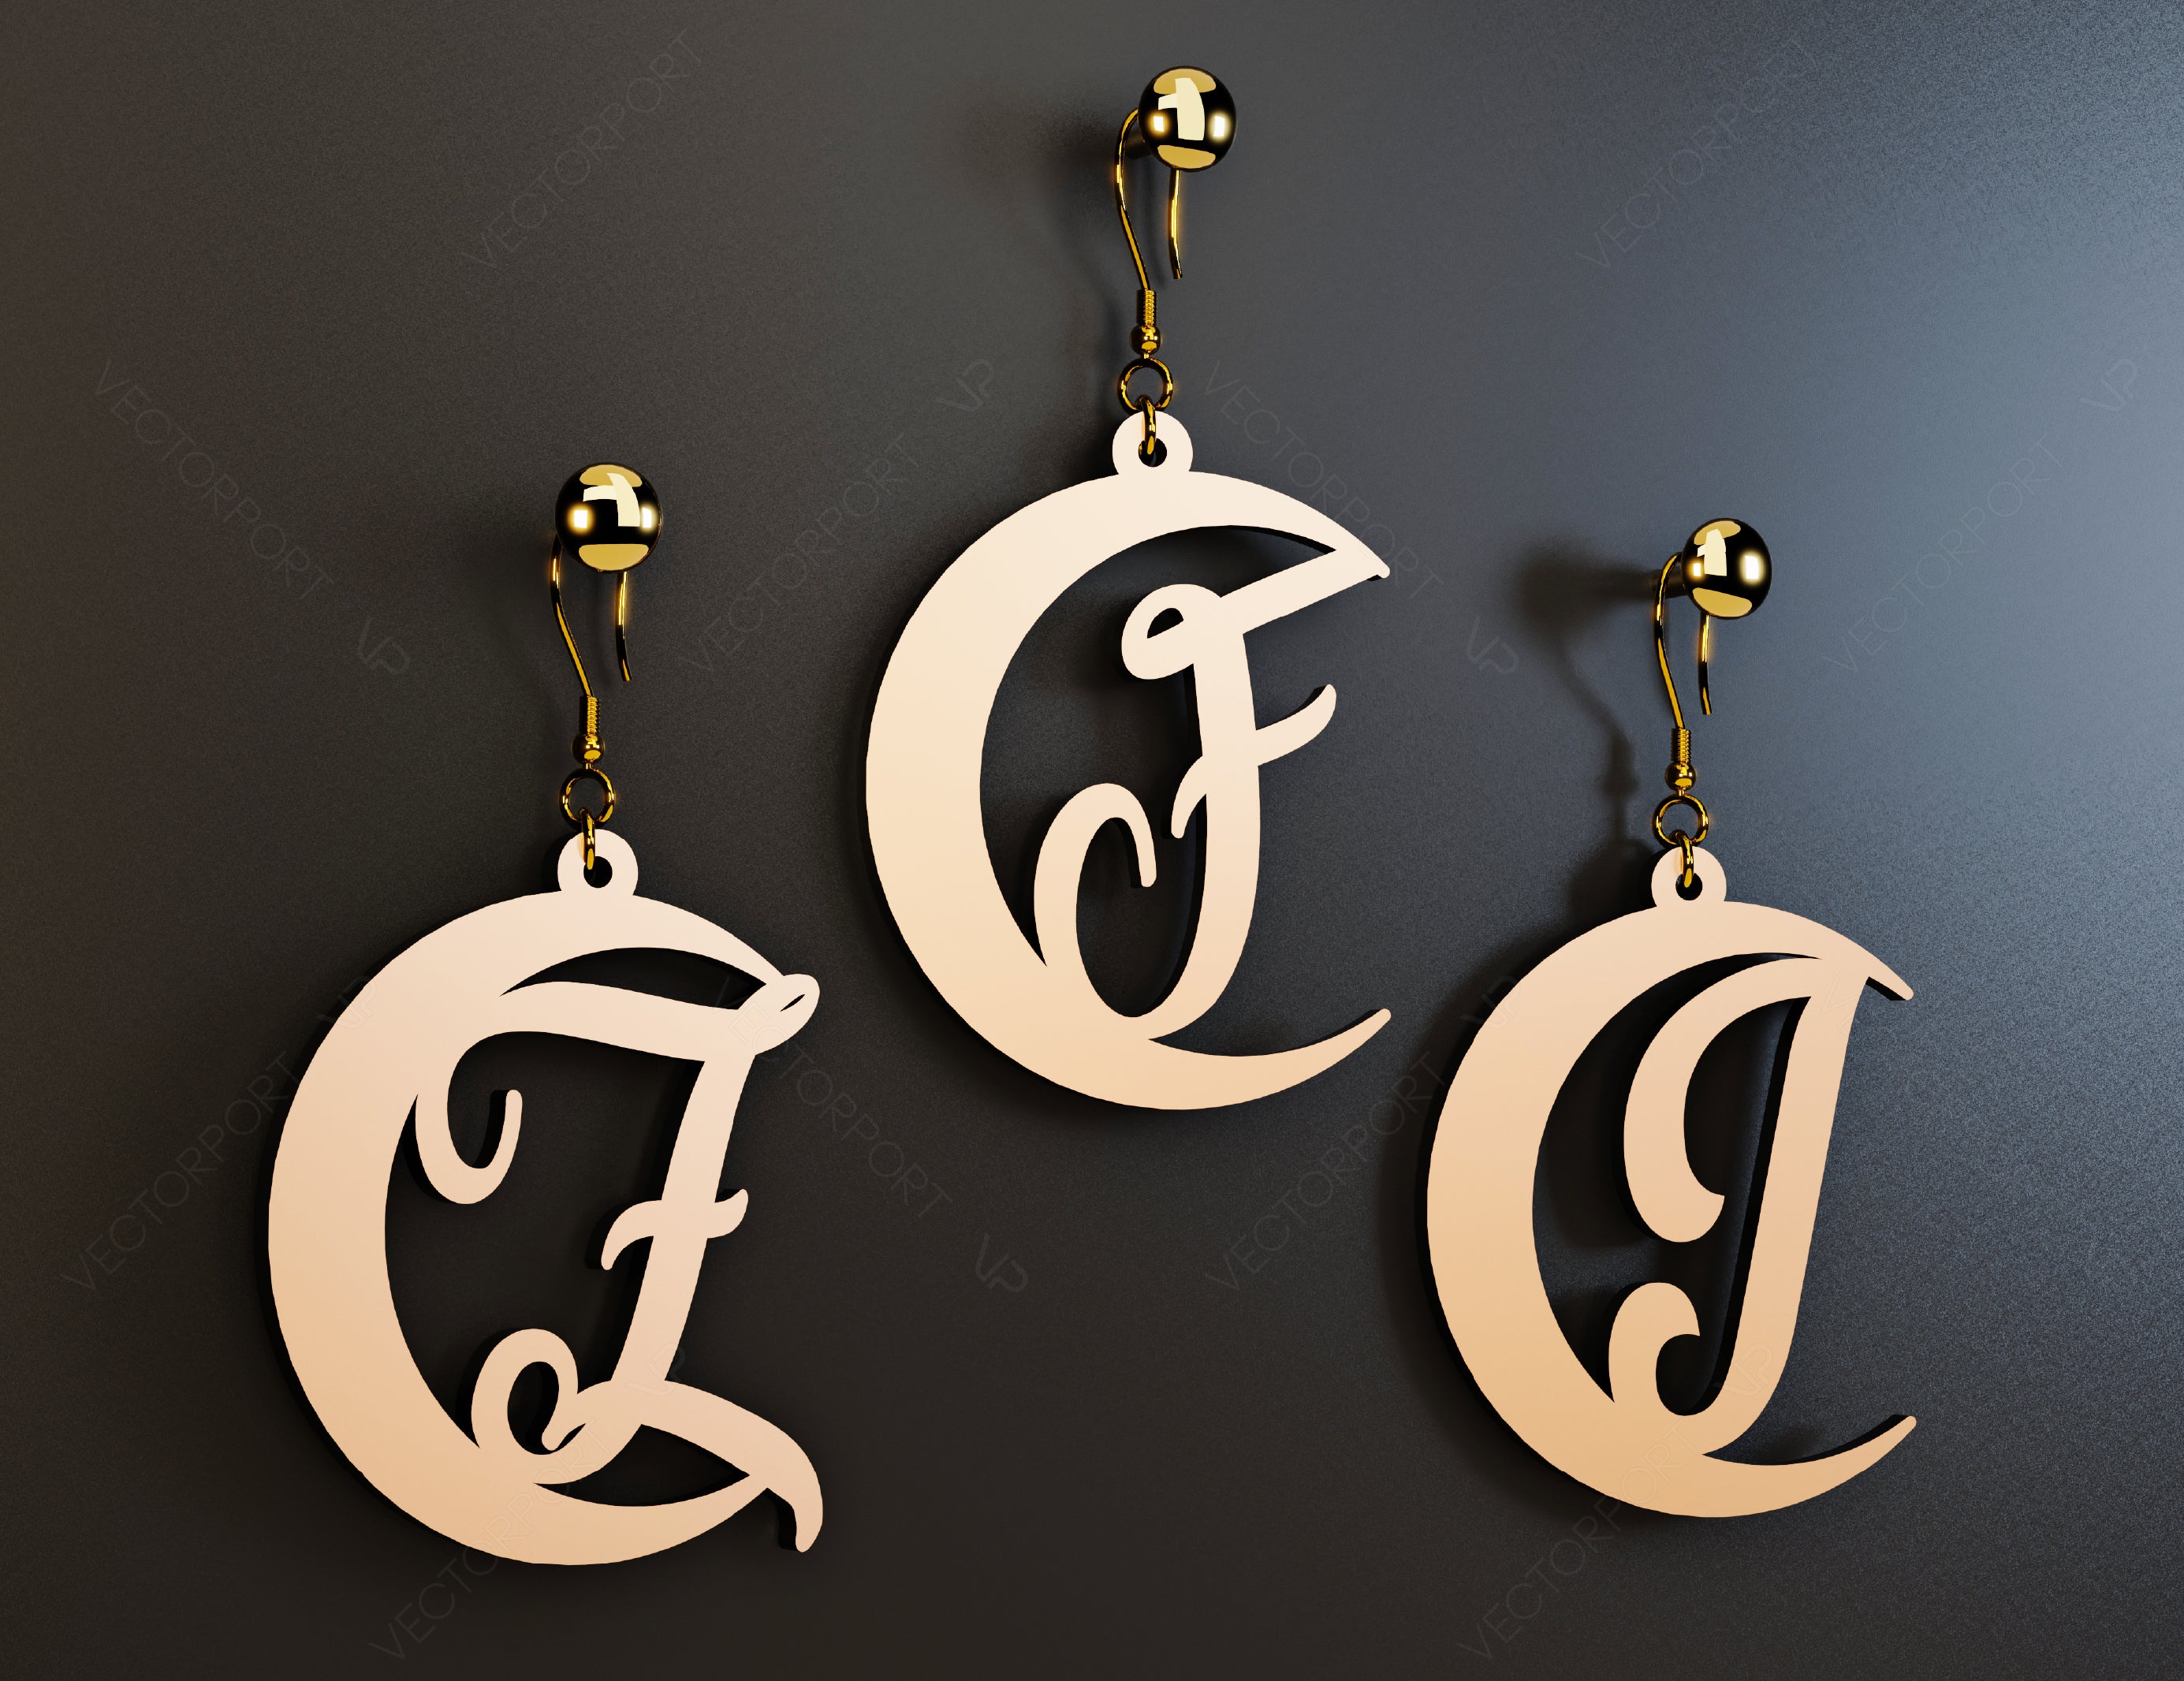 Crescent Alphabet Earrings Craft Jewelry Pendants Set Drop Laser cut Earrings SVG Template Silhouette Cut Files, Cricut Cut Files |#U017|